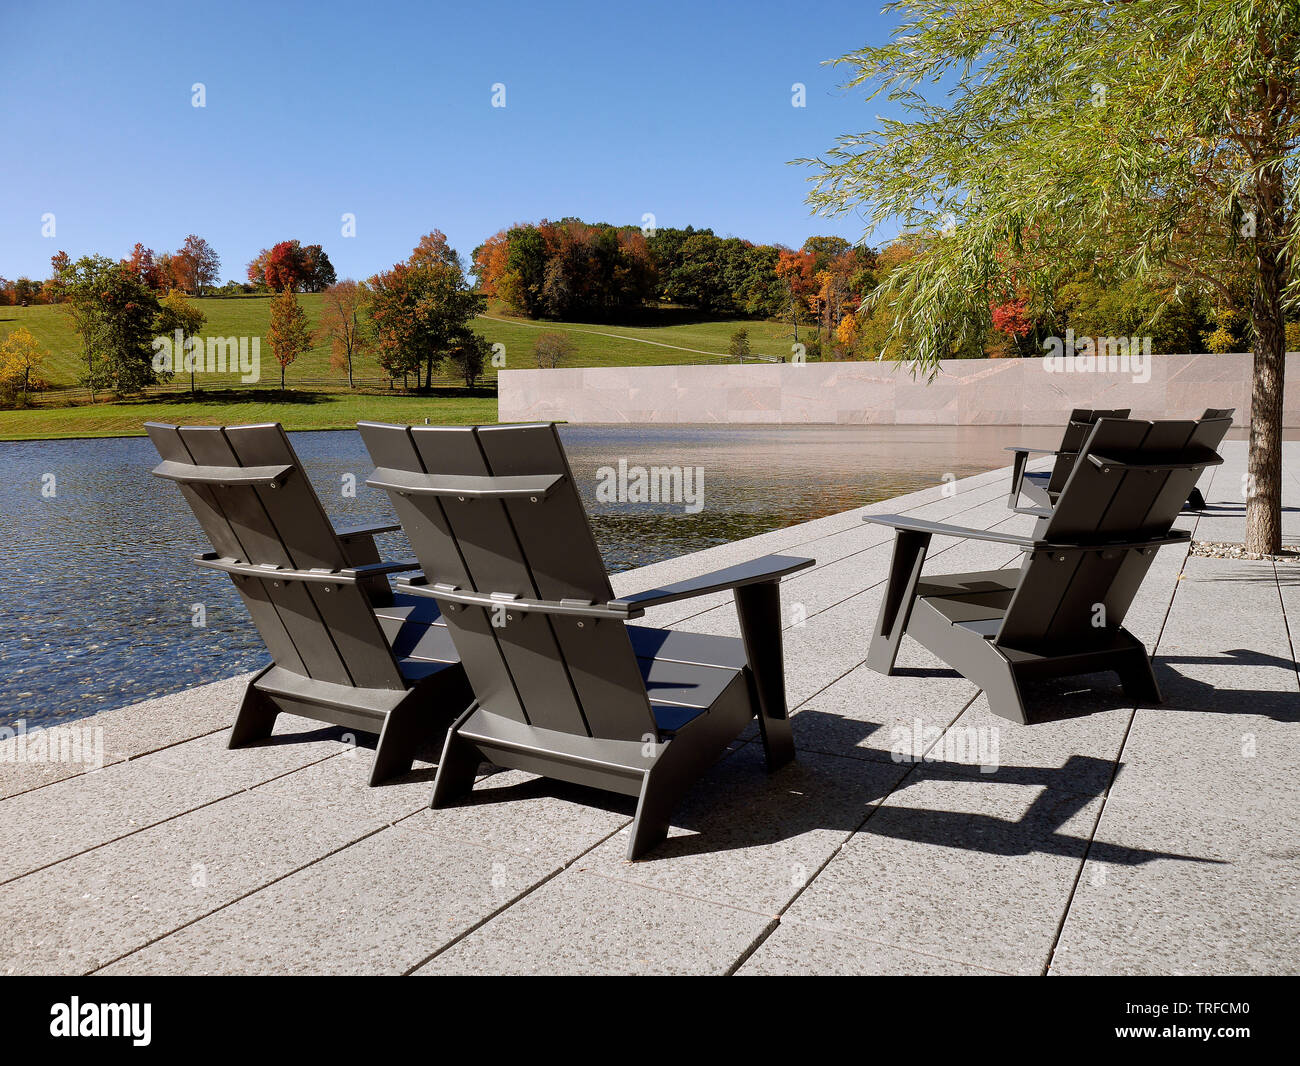 Tres sillas Adirondack situadas junto a una piscina. Foto de stock